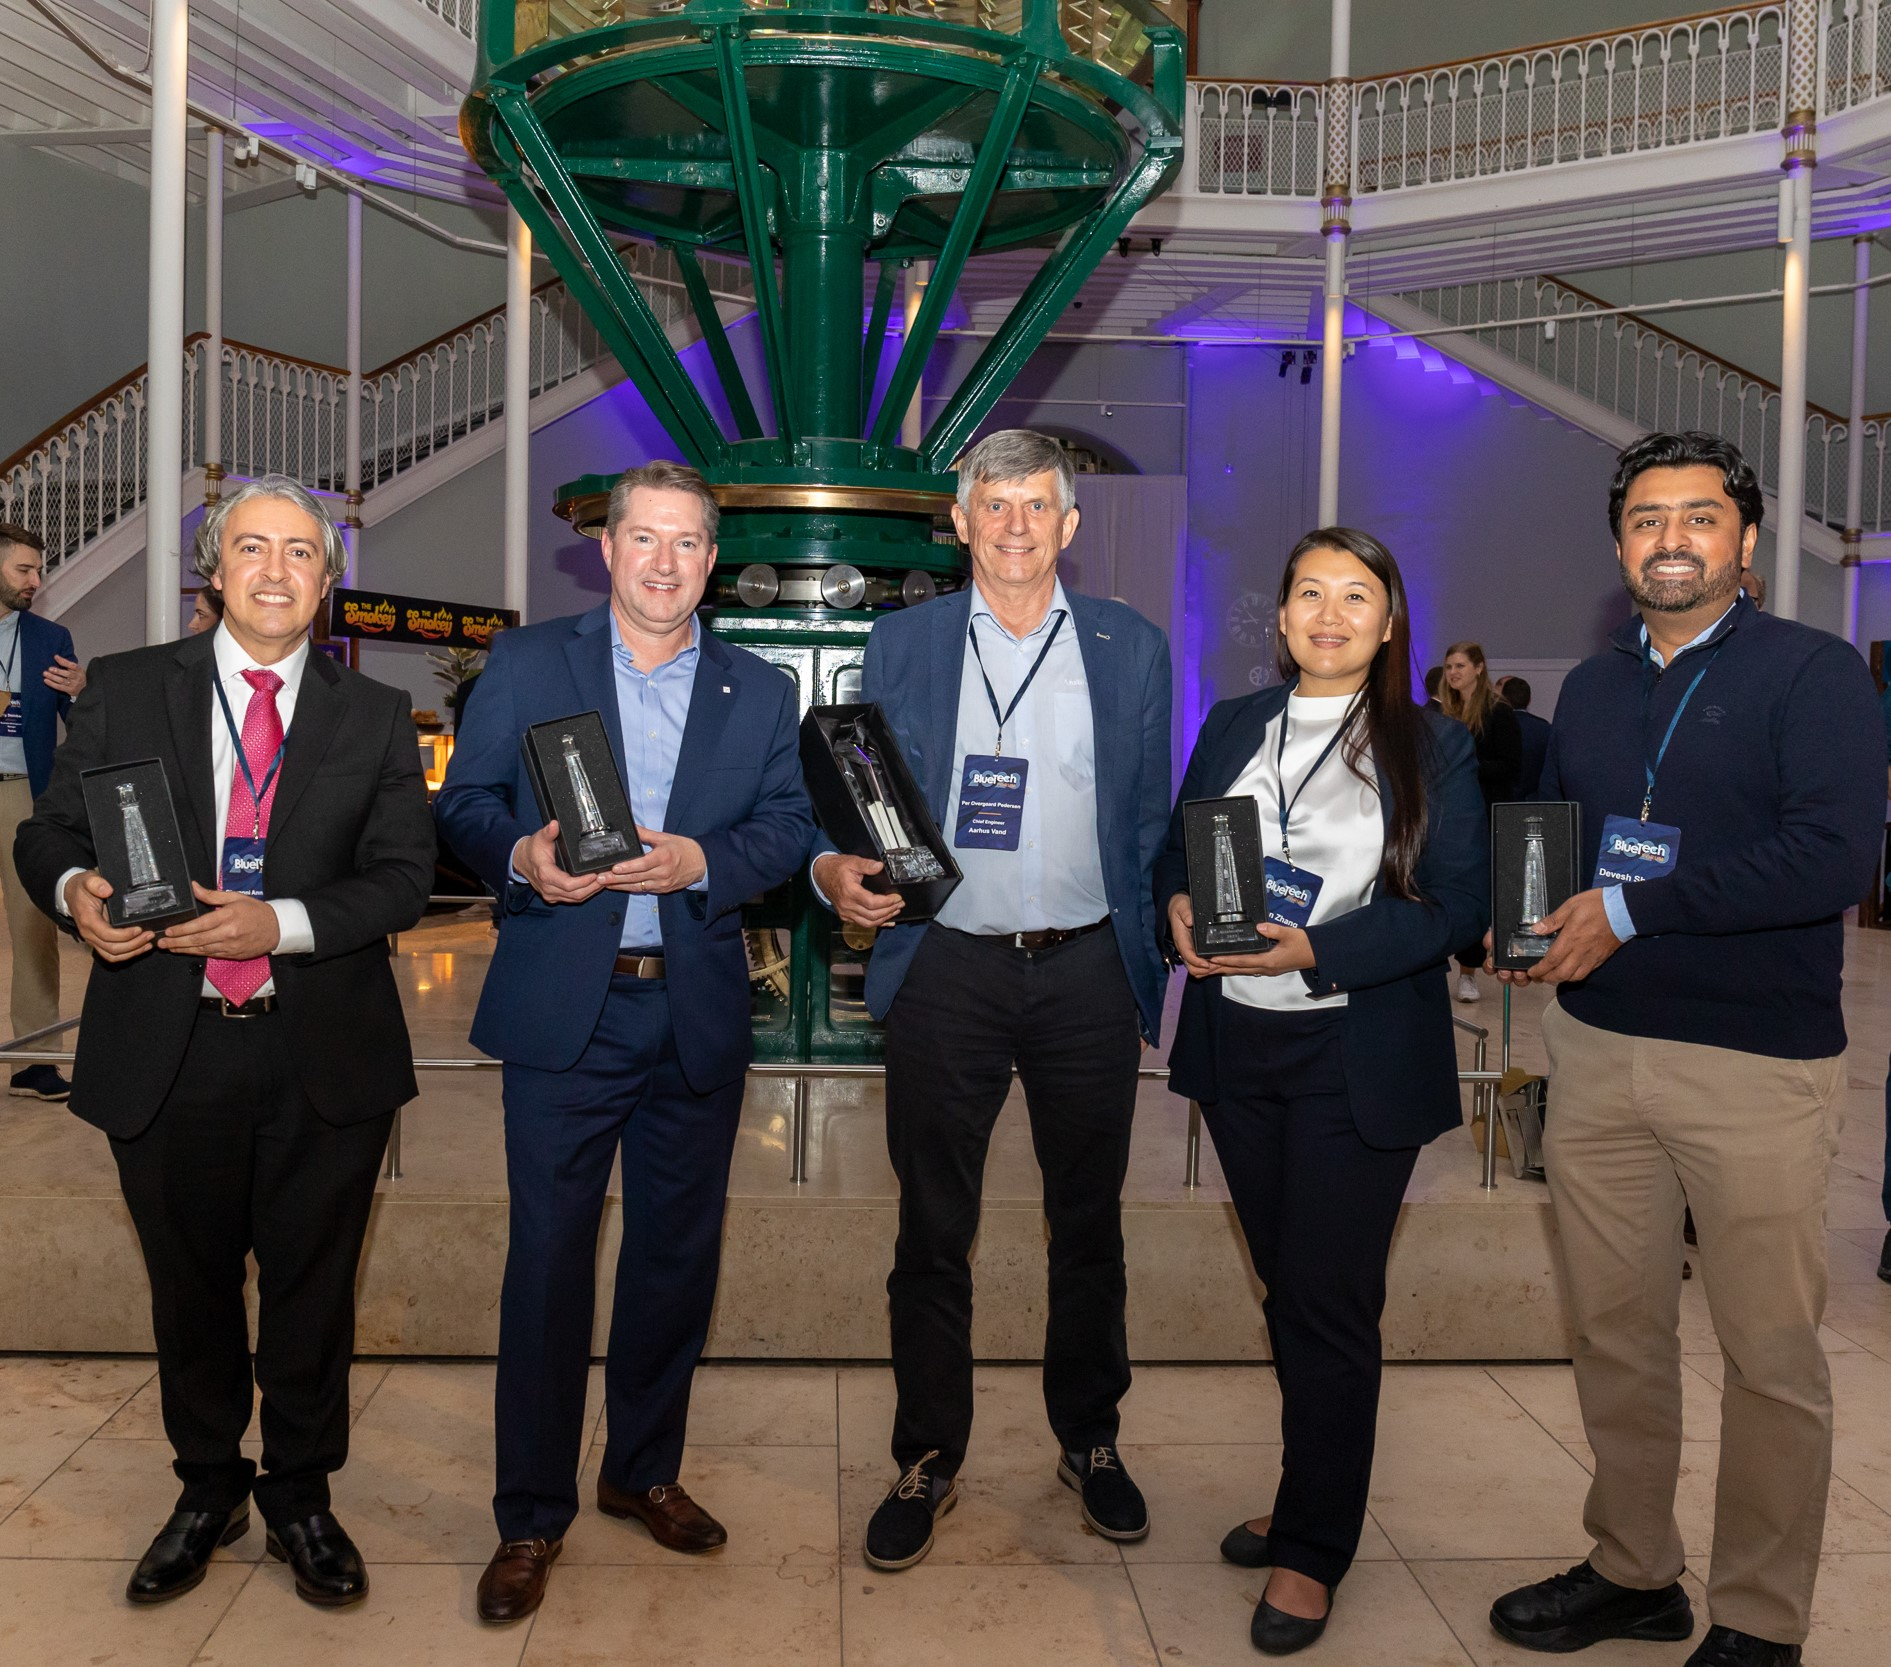 Pioneering companies win prestigious Lighthouse Award